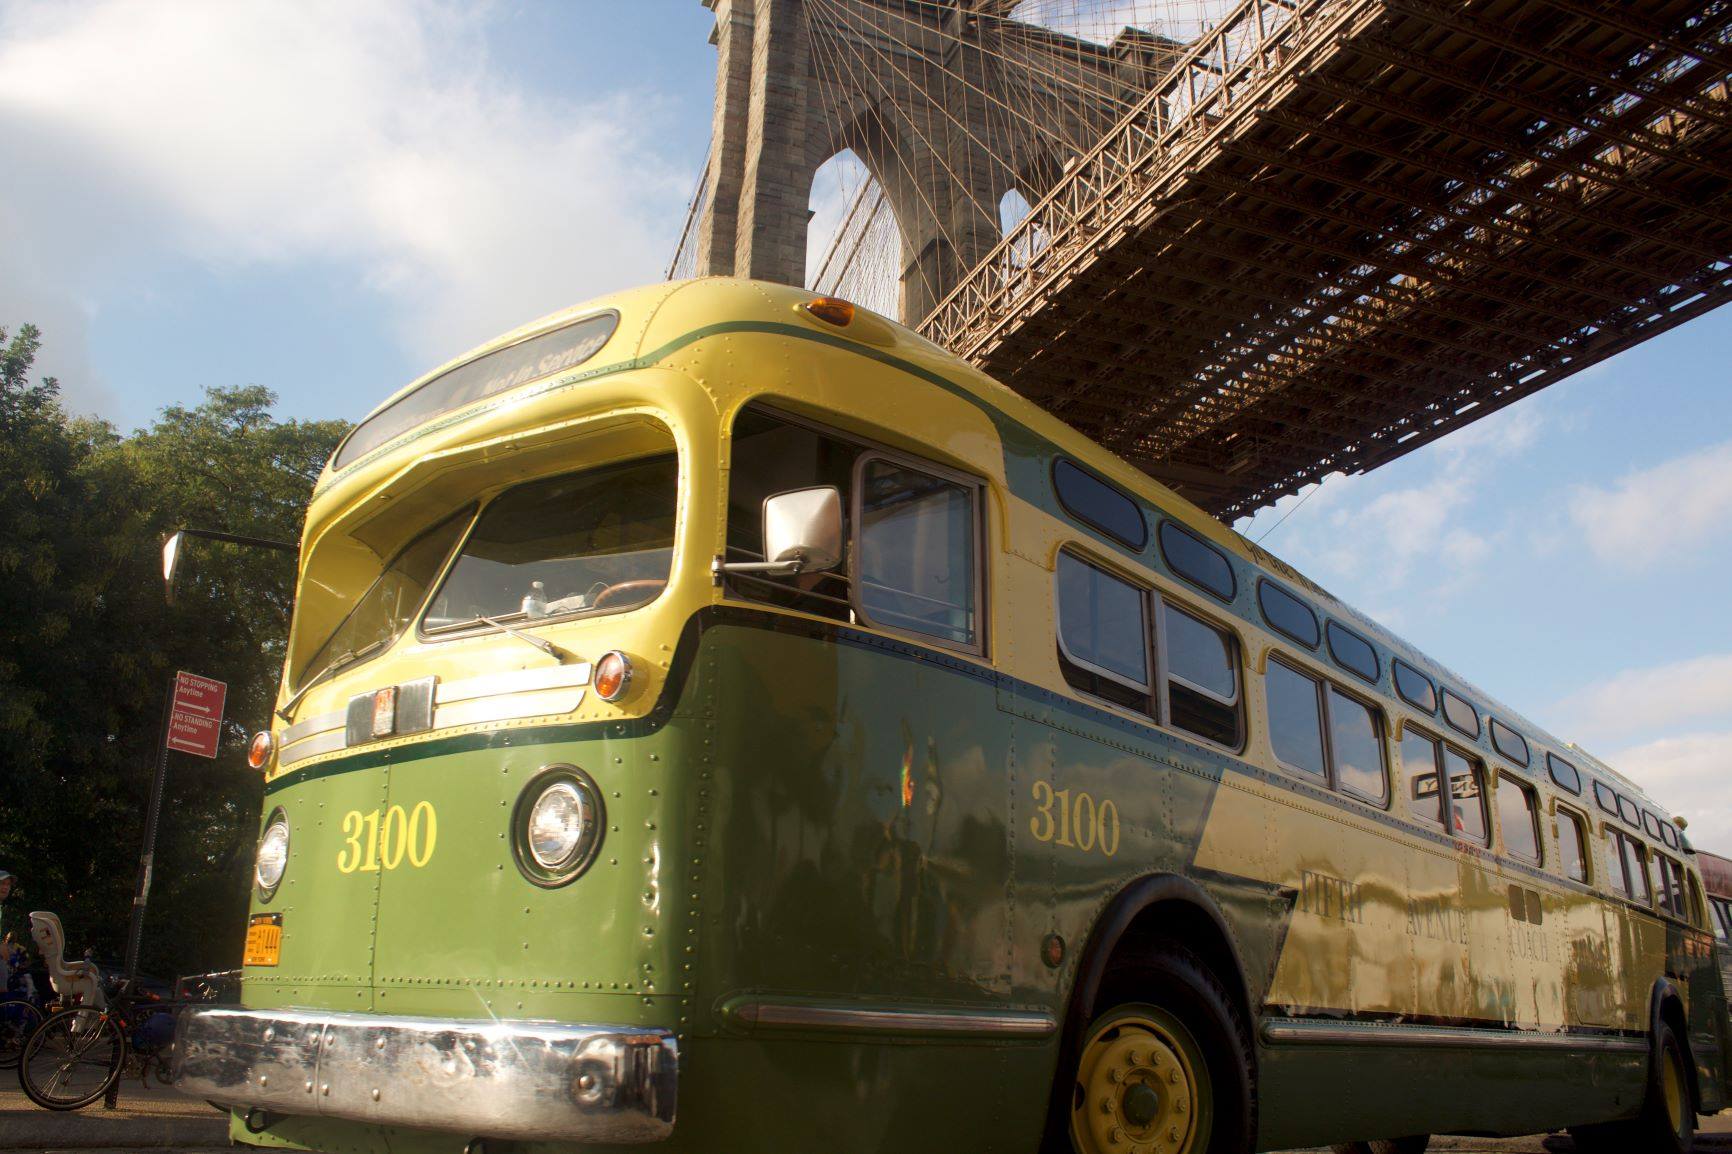 Bus 3100 under the Brooklyn Bridge